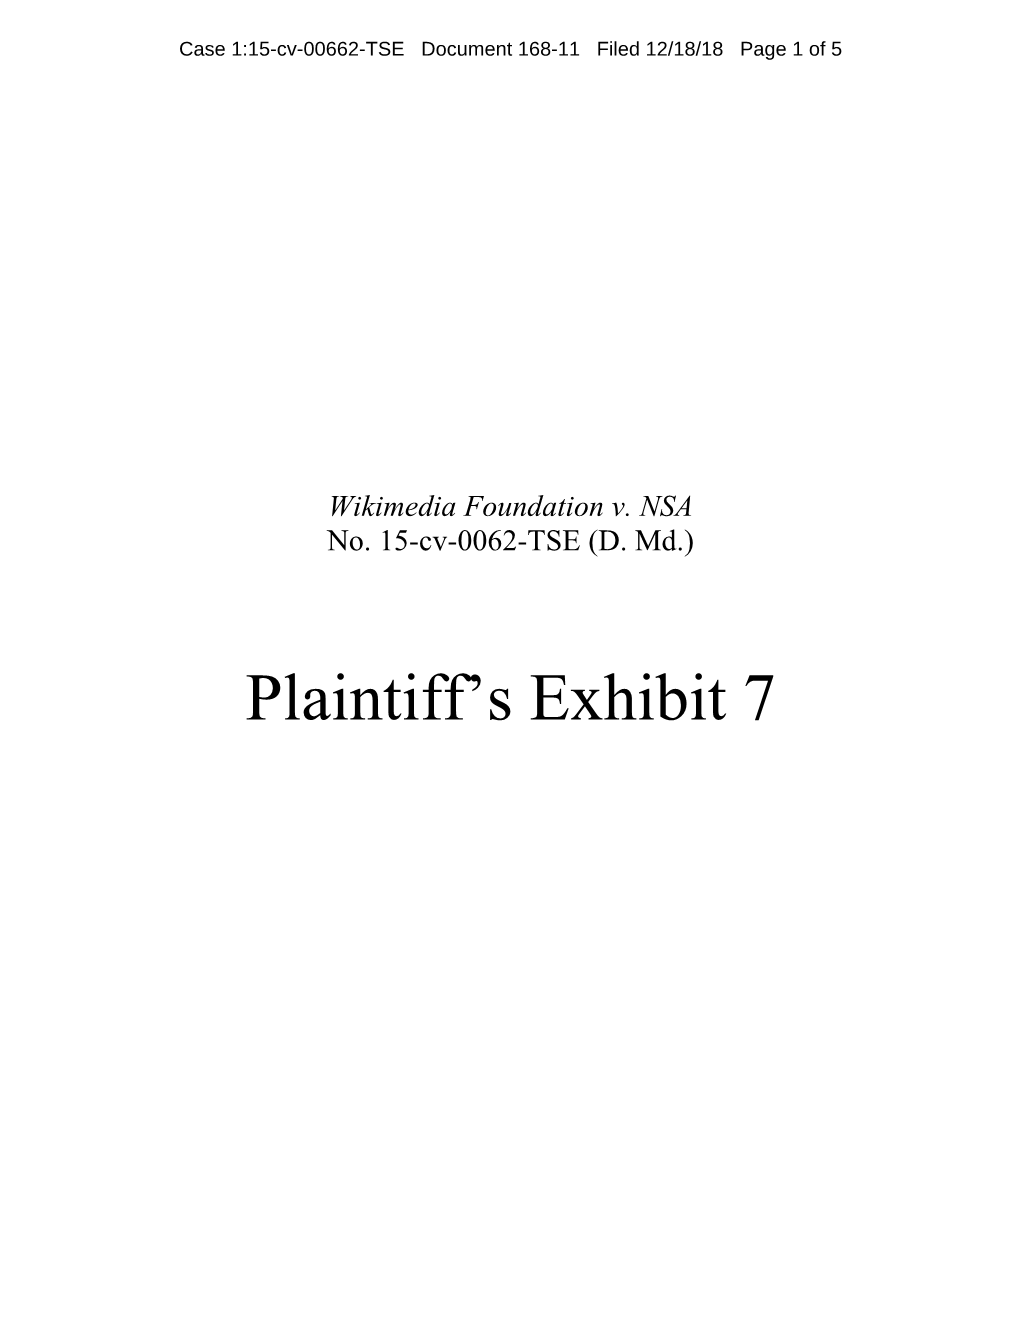 Plaintiff's Exhibit 7